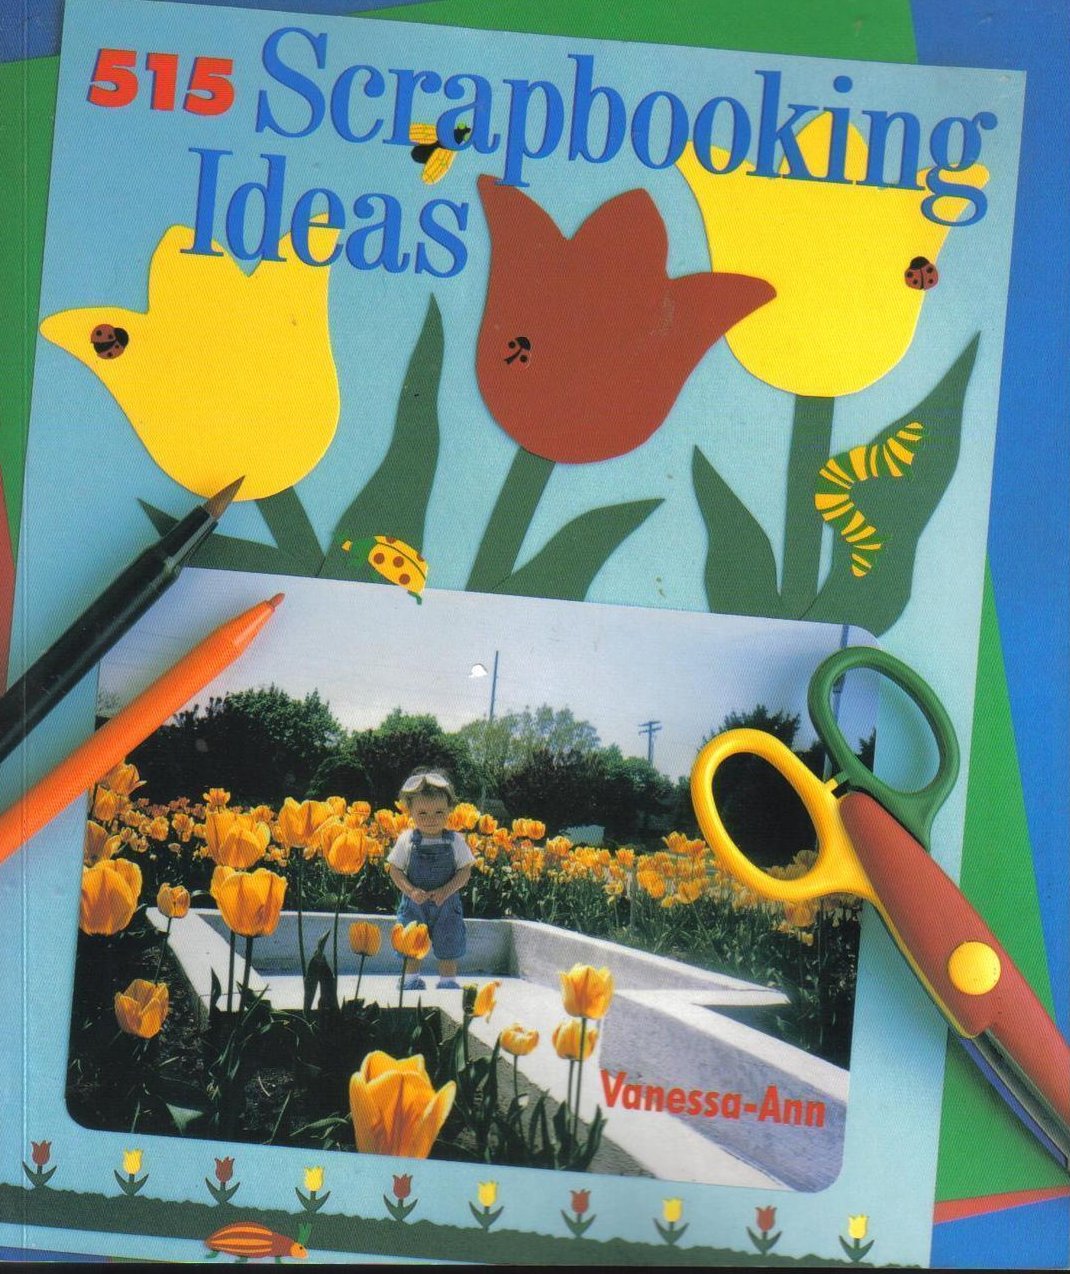 515 Scrapbooking Ideas  Vanessa-Ann Book